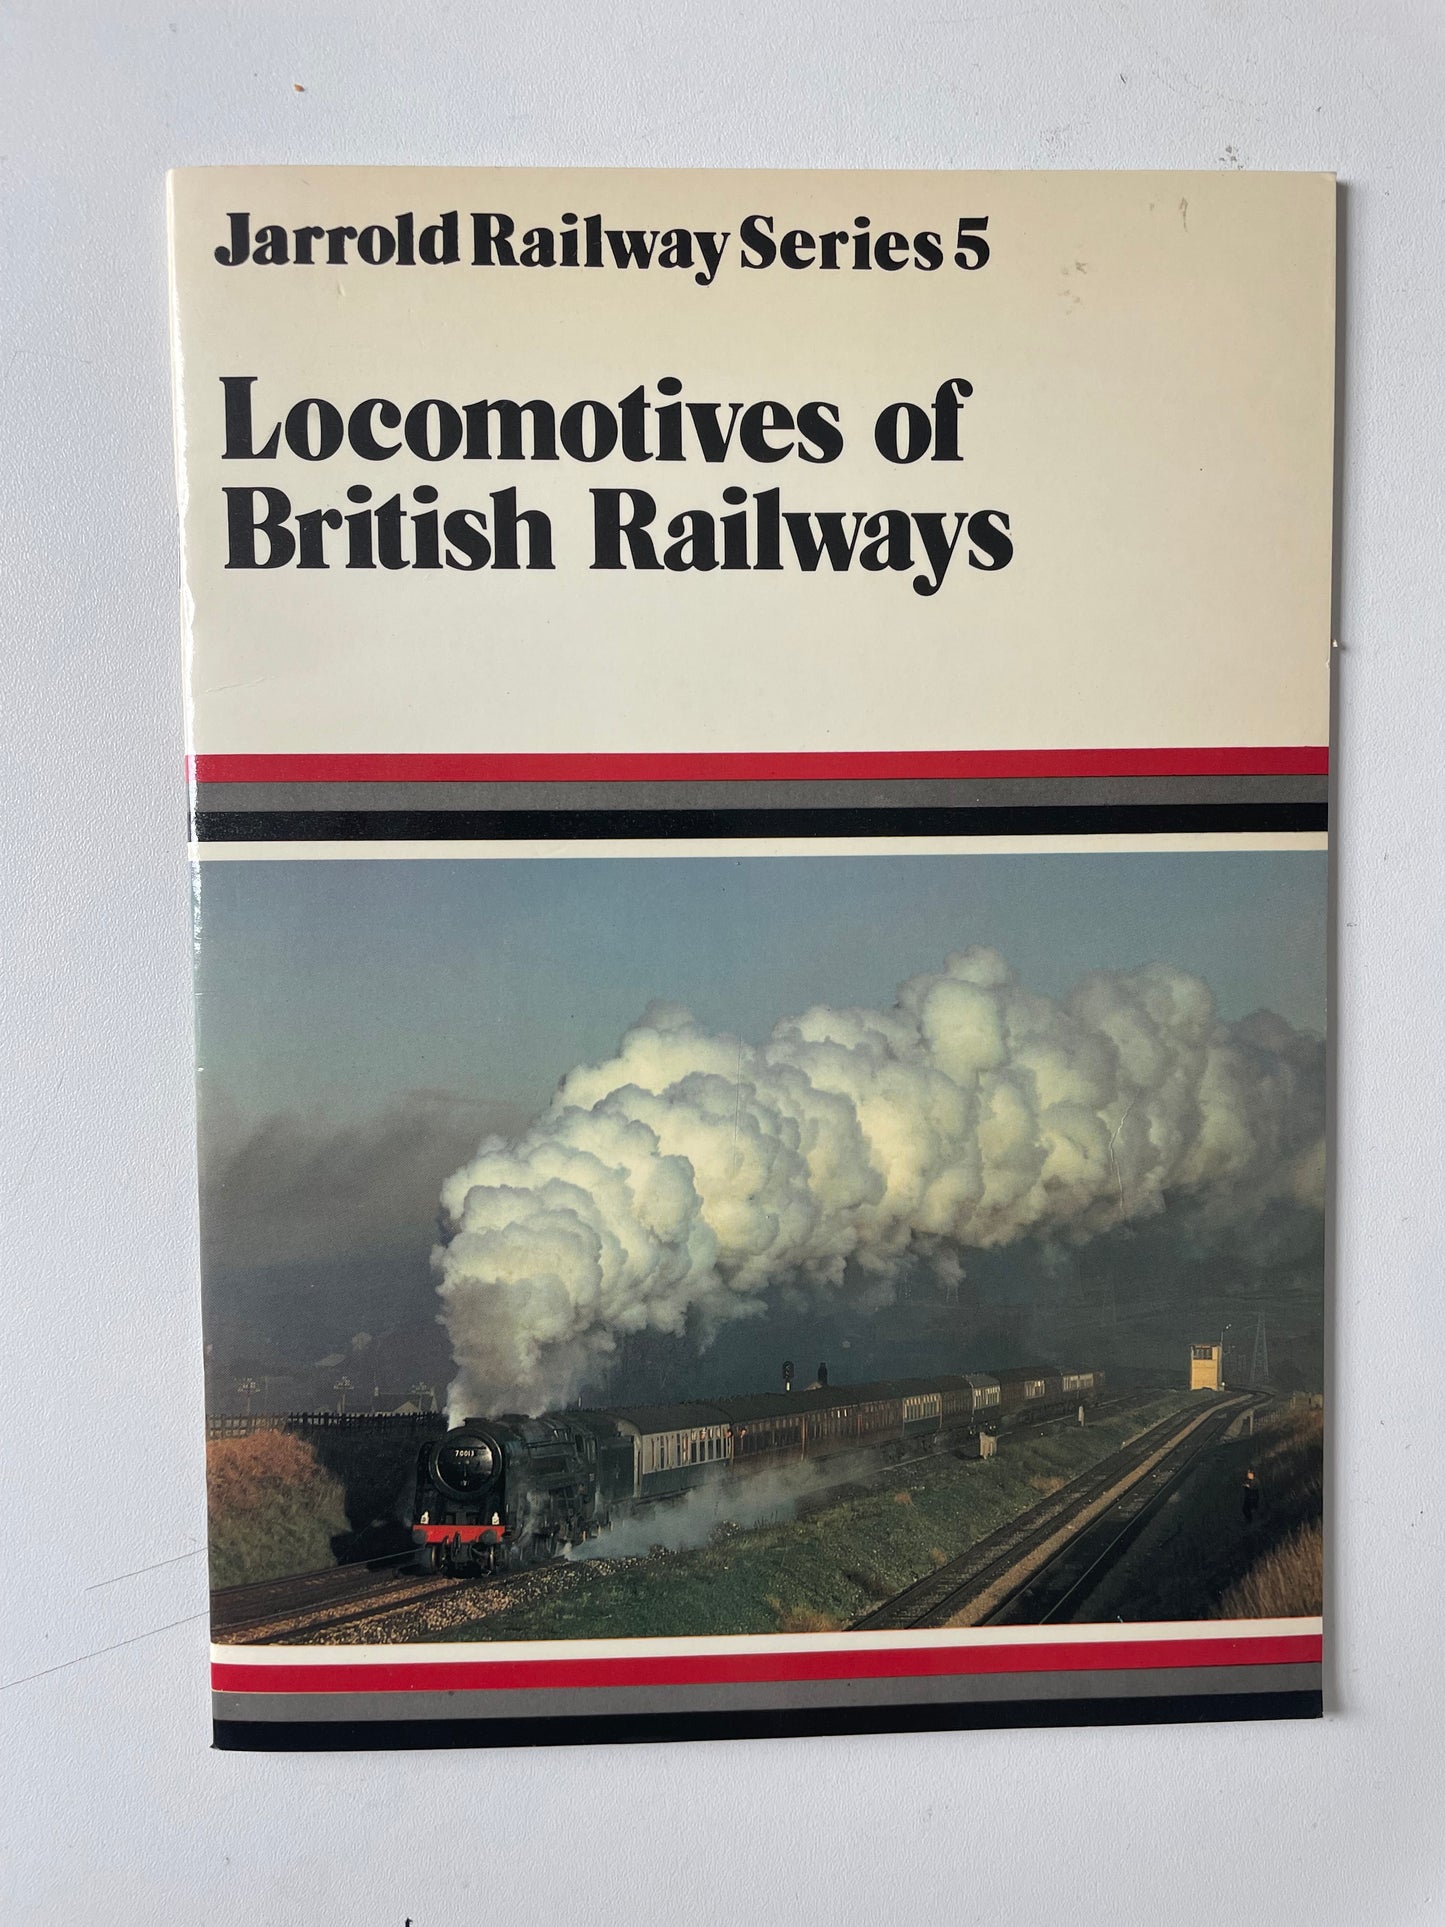 Locomotives of British Railways (Jarrold Railway Series 5) - Chester Model Centre